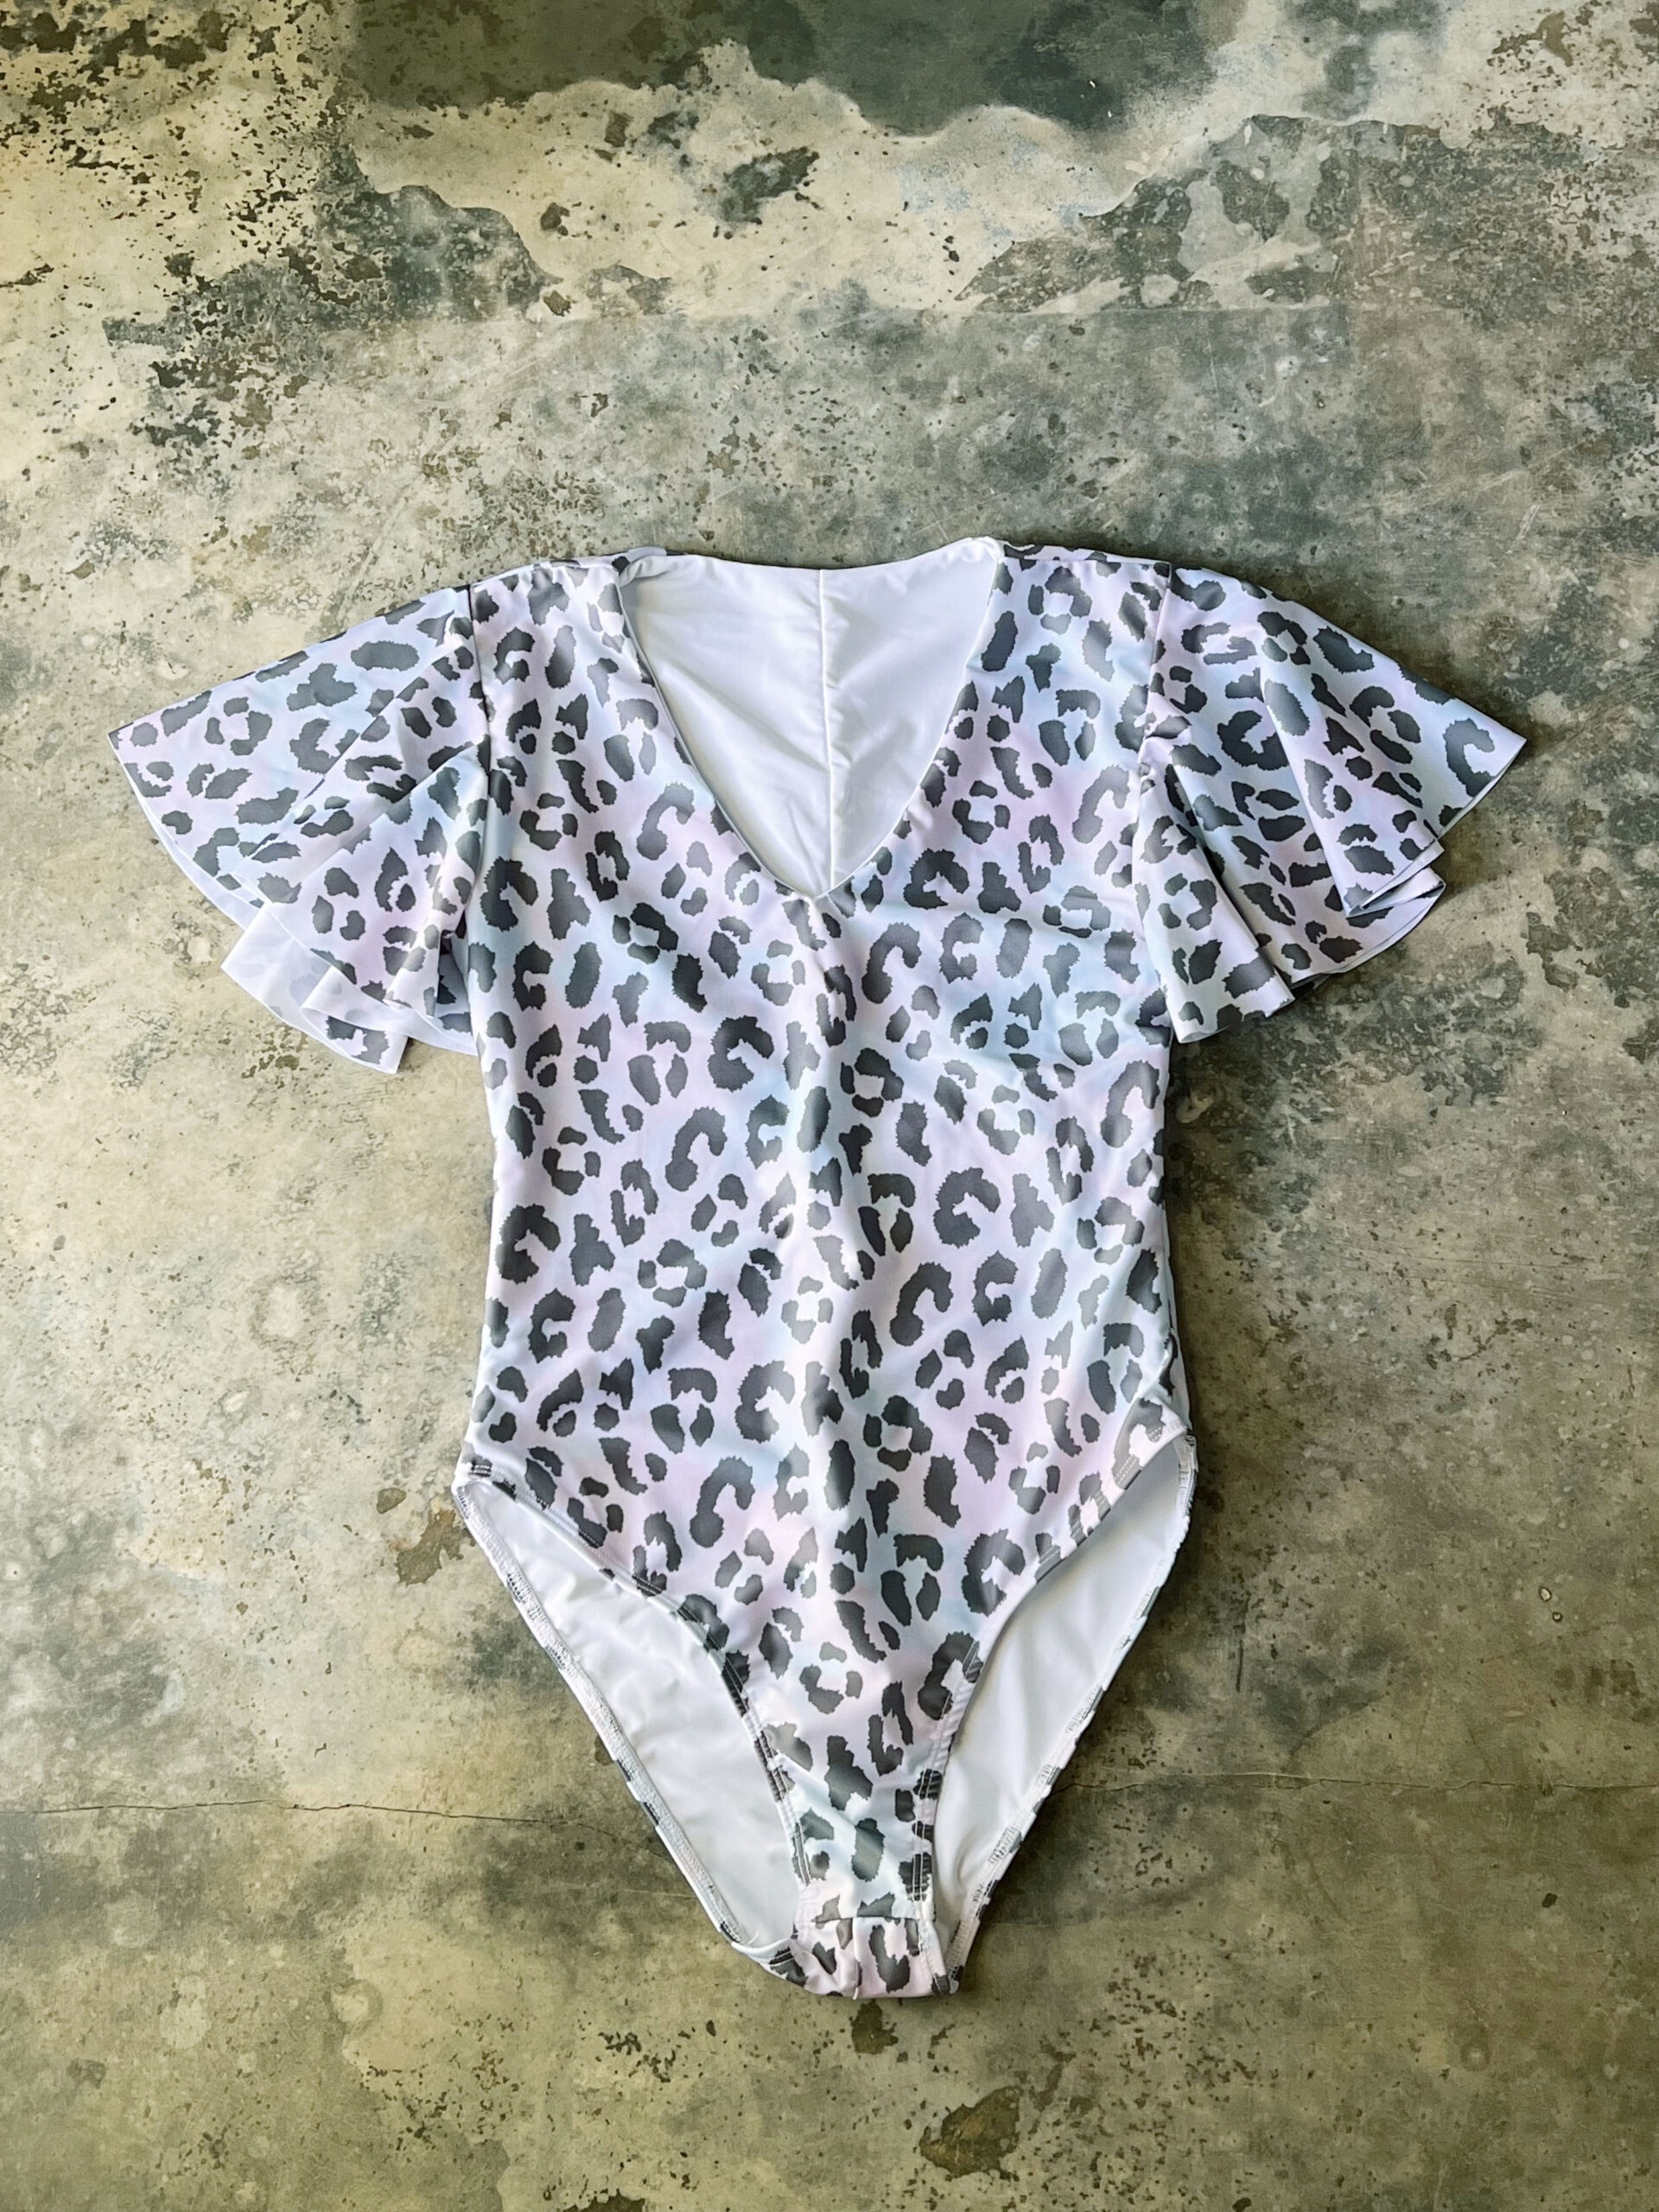 kimono sleeves sustainable one piece bathing suit